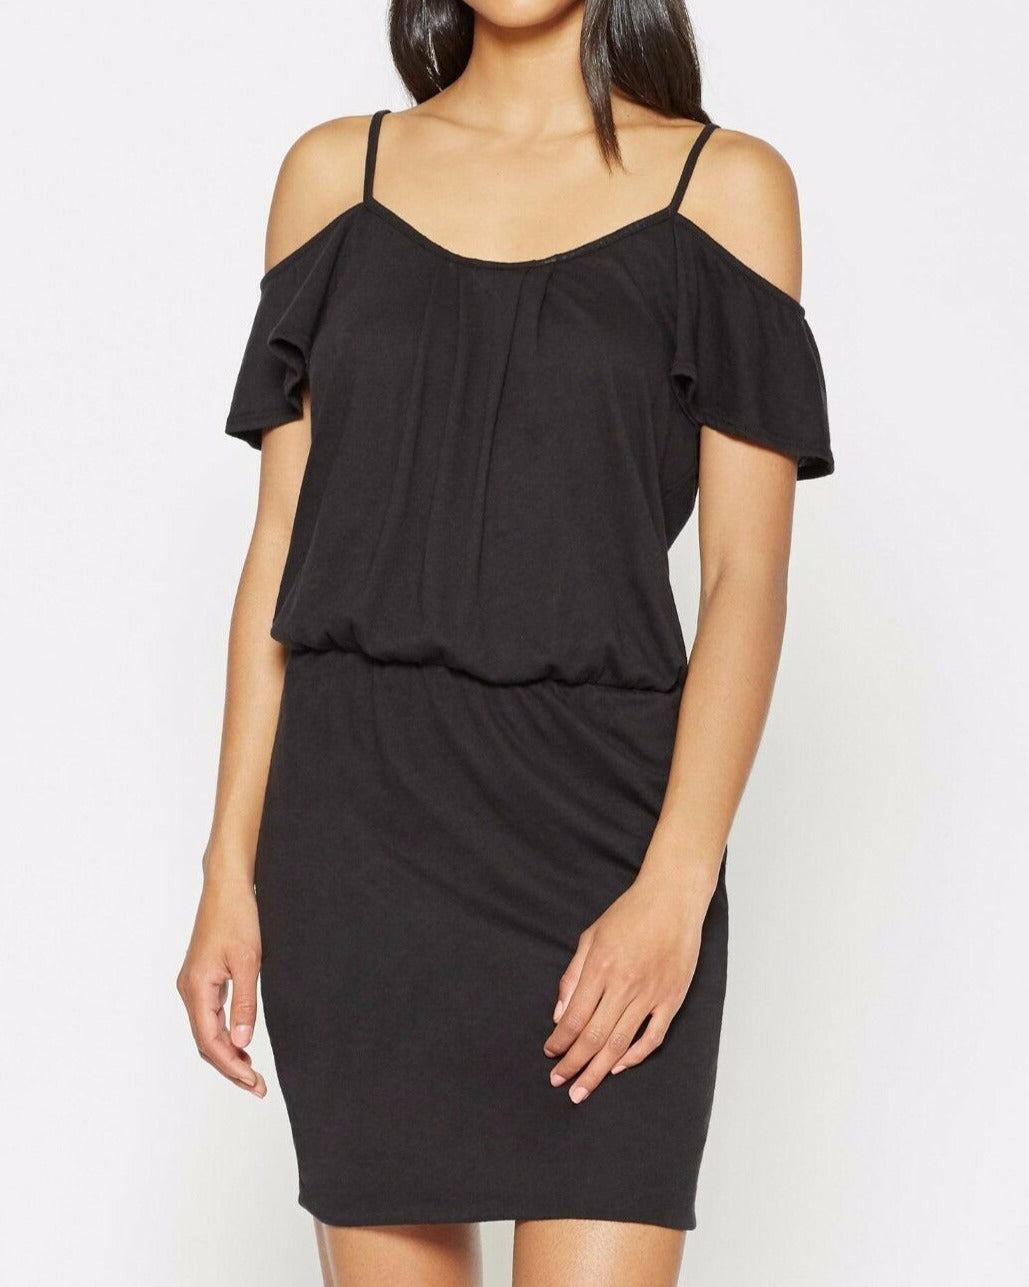 Soft Joie Tahlia Cold Shoulder Black Stretch Jersey Short Blouson Dress - Luxe Fashion Finds